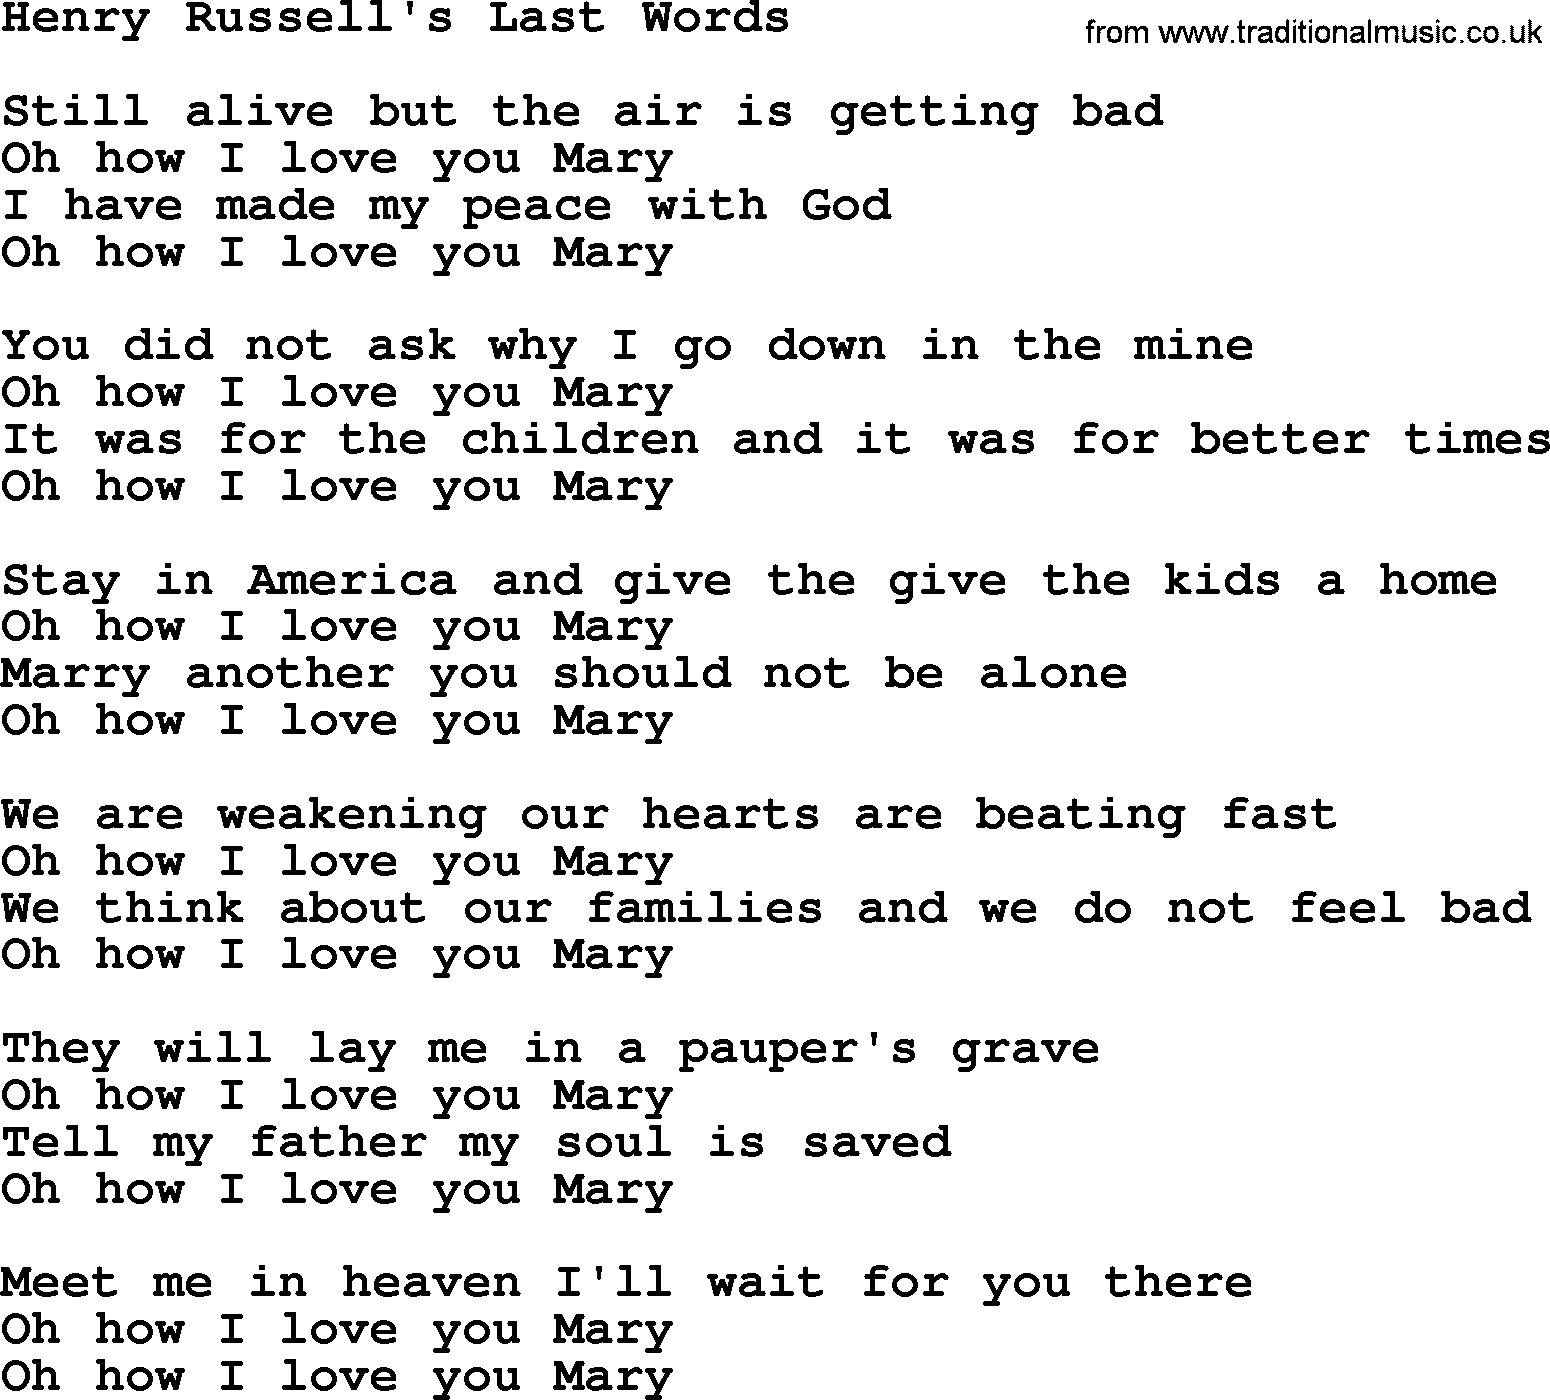 Joan Baez song Henry Russell's Last Words, lyrics